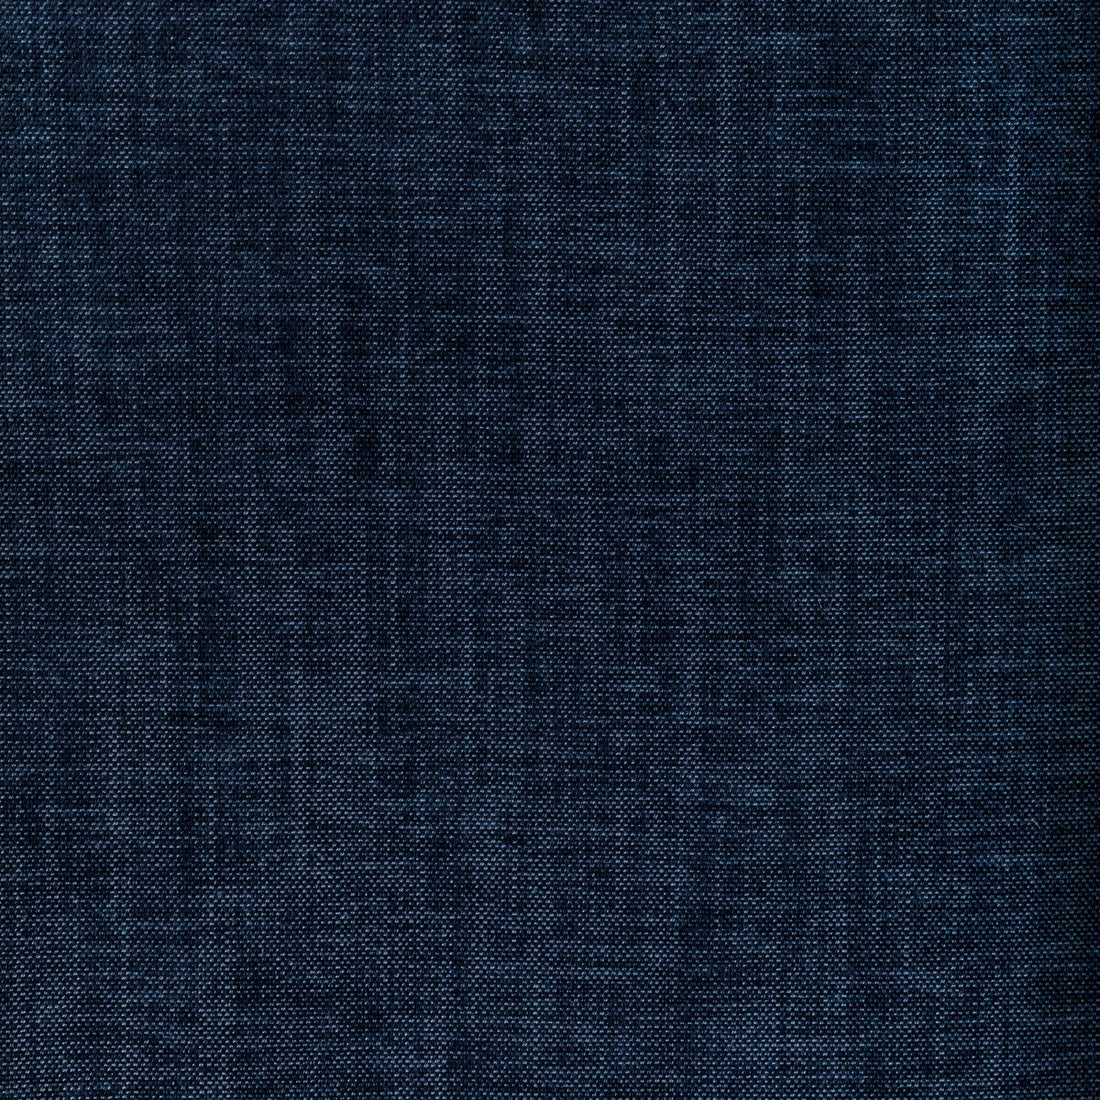 Kravet Smart fabric in 36650-50 color - pattern 36650.50.0 - by Kravet Smart in the Performance Kravetarmor collection